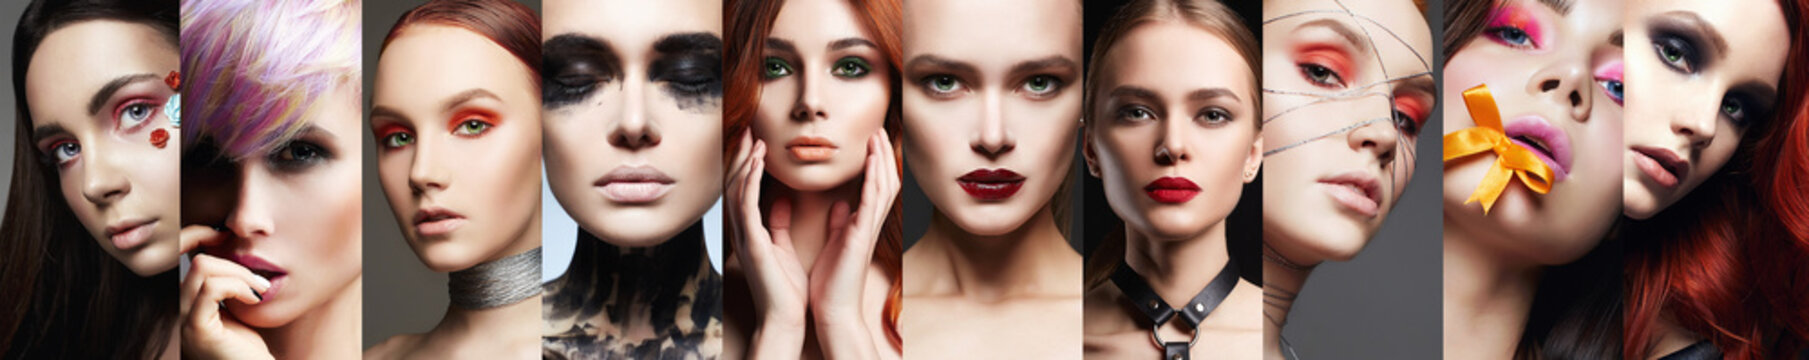 beauty collage. women. Makeup beautiful girls mosaic